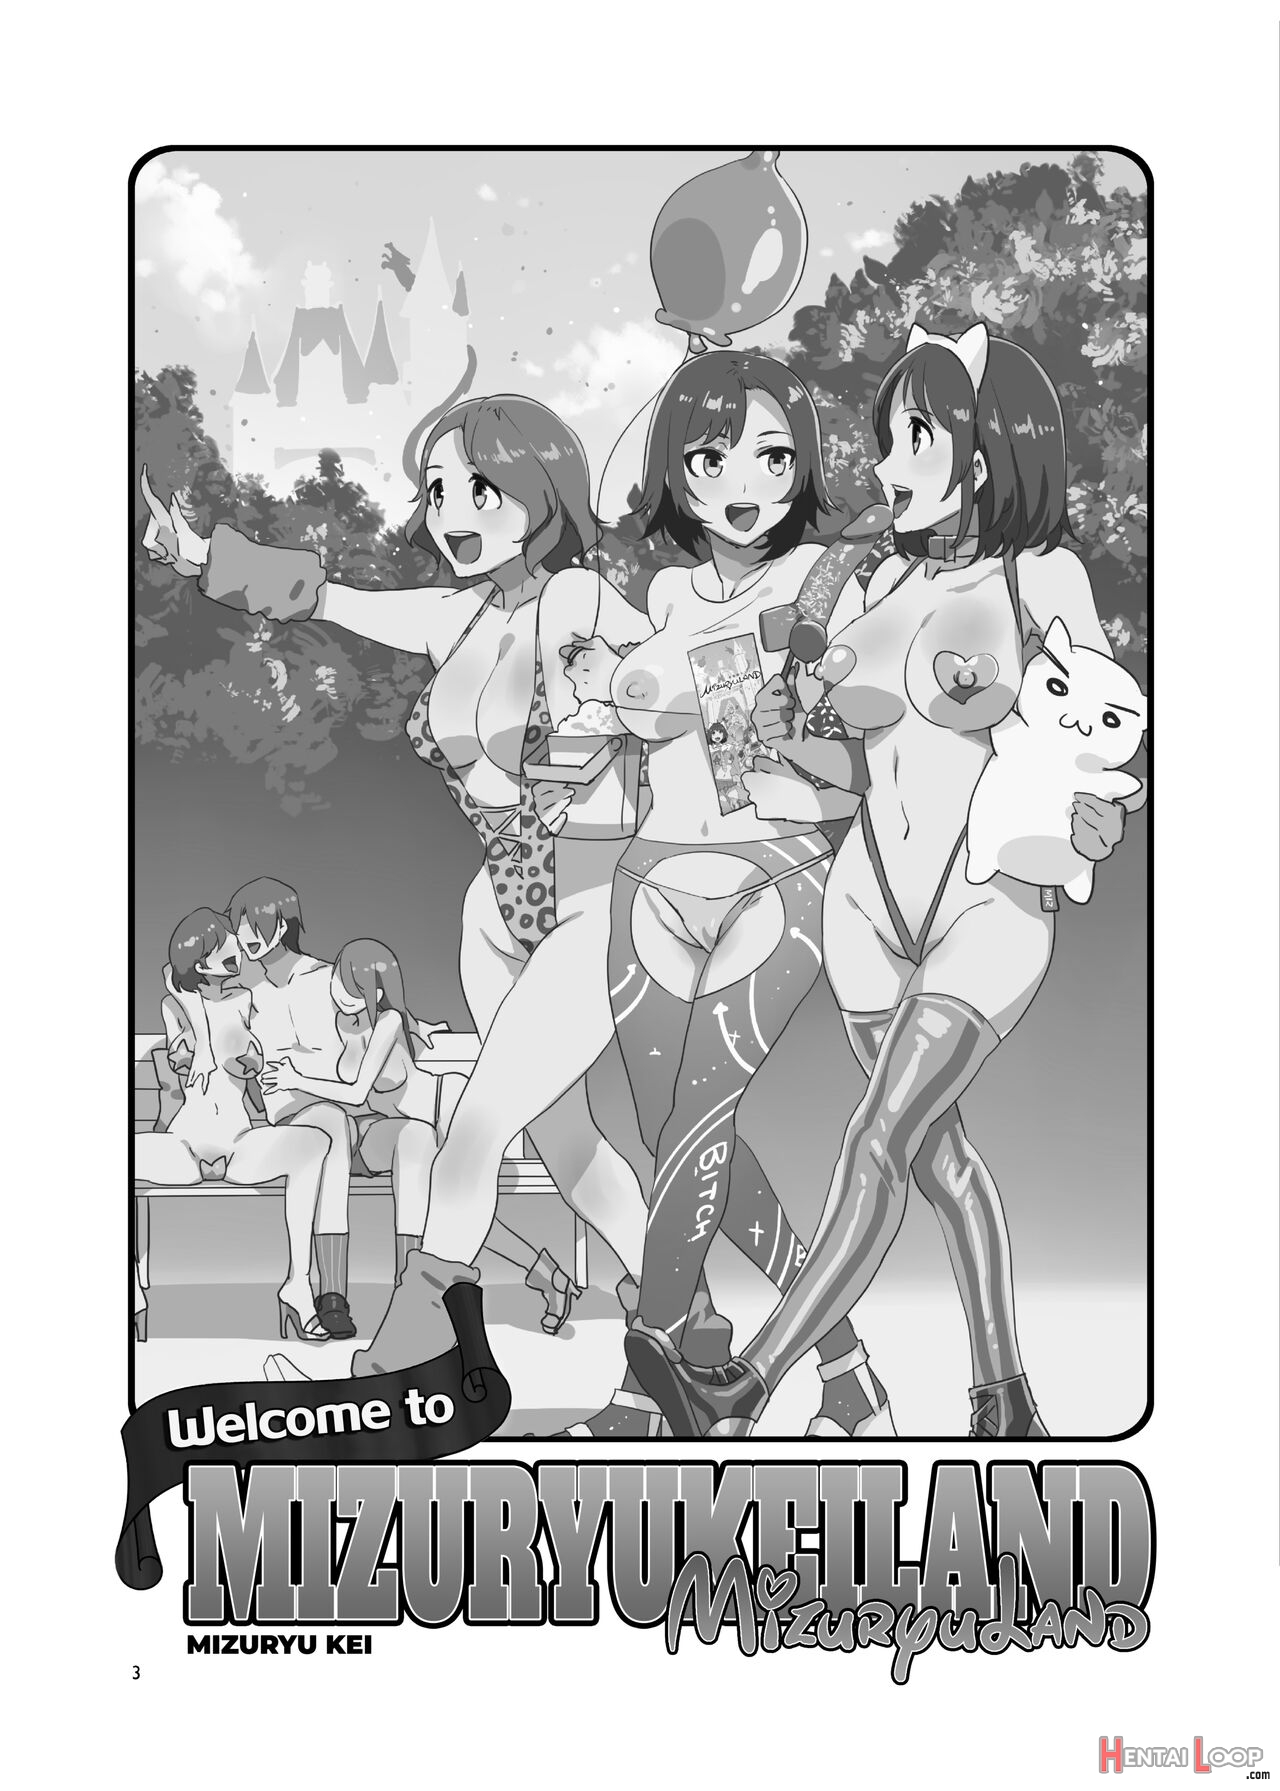 Welcome To Mizuryukei Land - The 1st Day page 3